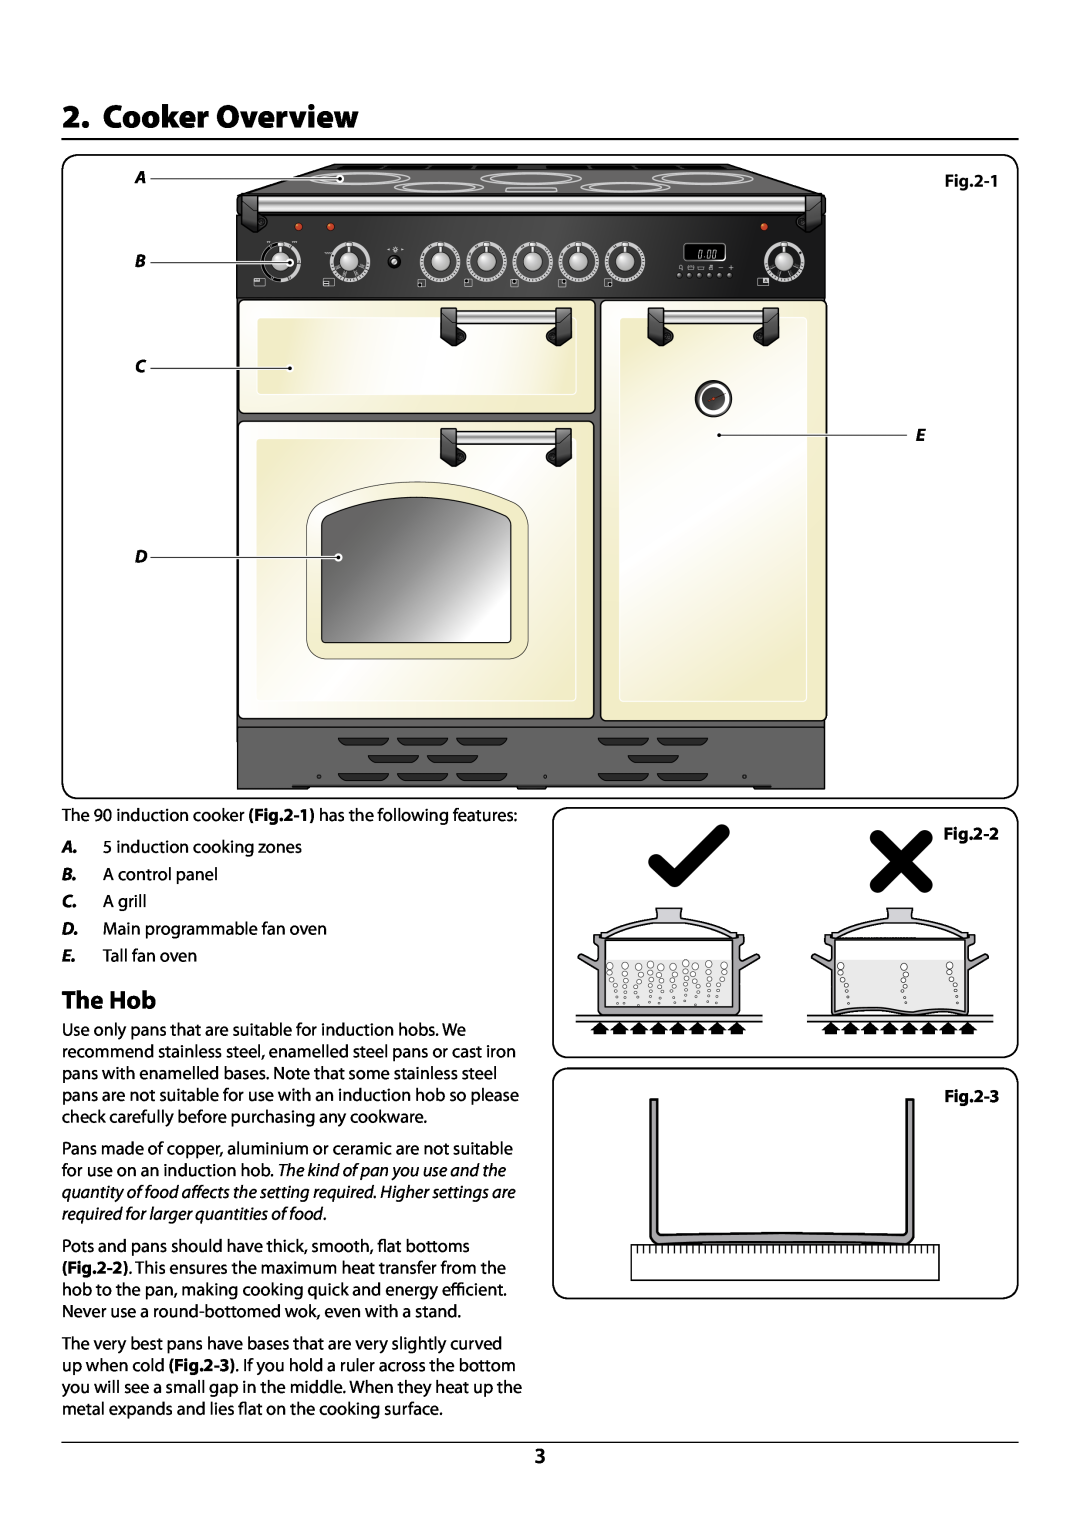 Rangemaster U109976 - 02 manual Cooker Overview, The Hob, 3 